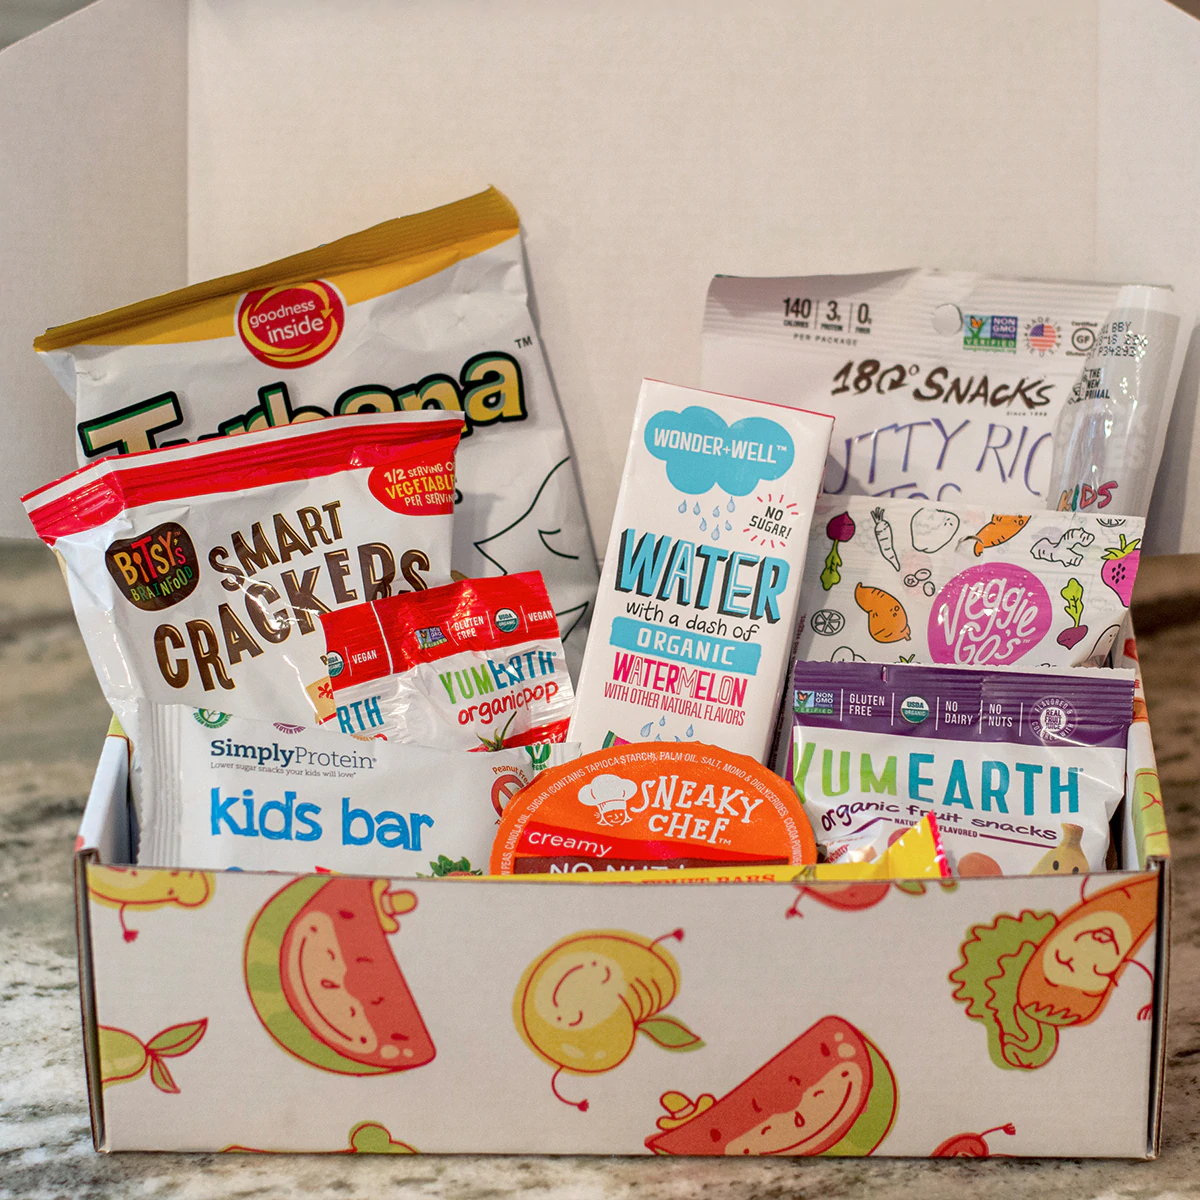 Best children's snack box : Top 5